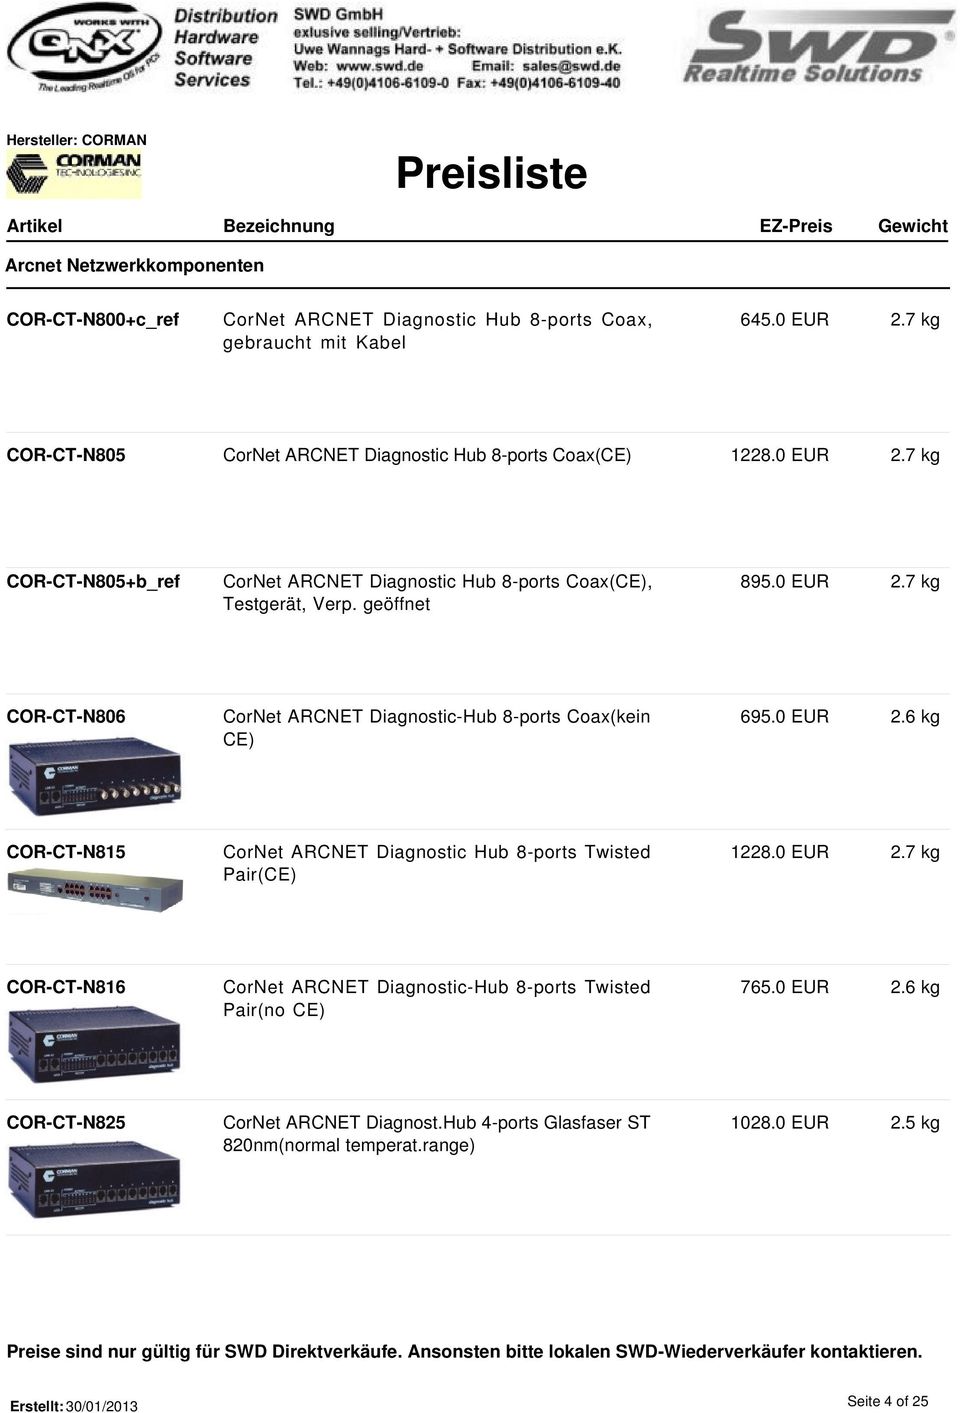 geöffnet 895.0 EUR 2.7 kg COR-CT-N806 CorNet ARCNET Diagnostic-Hub 8-ports Coax(kein CE) 695.0 EUR 2.6 kg COR-CT-N815 CorNet ARCNET Diagnostic Hub 8-ports Twisted Pair(CE) 1228.